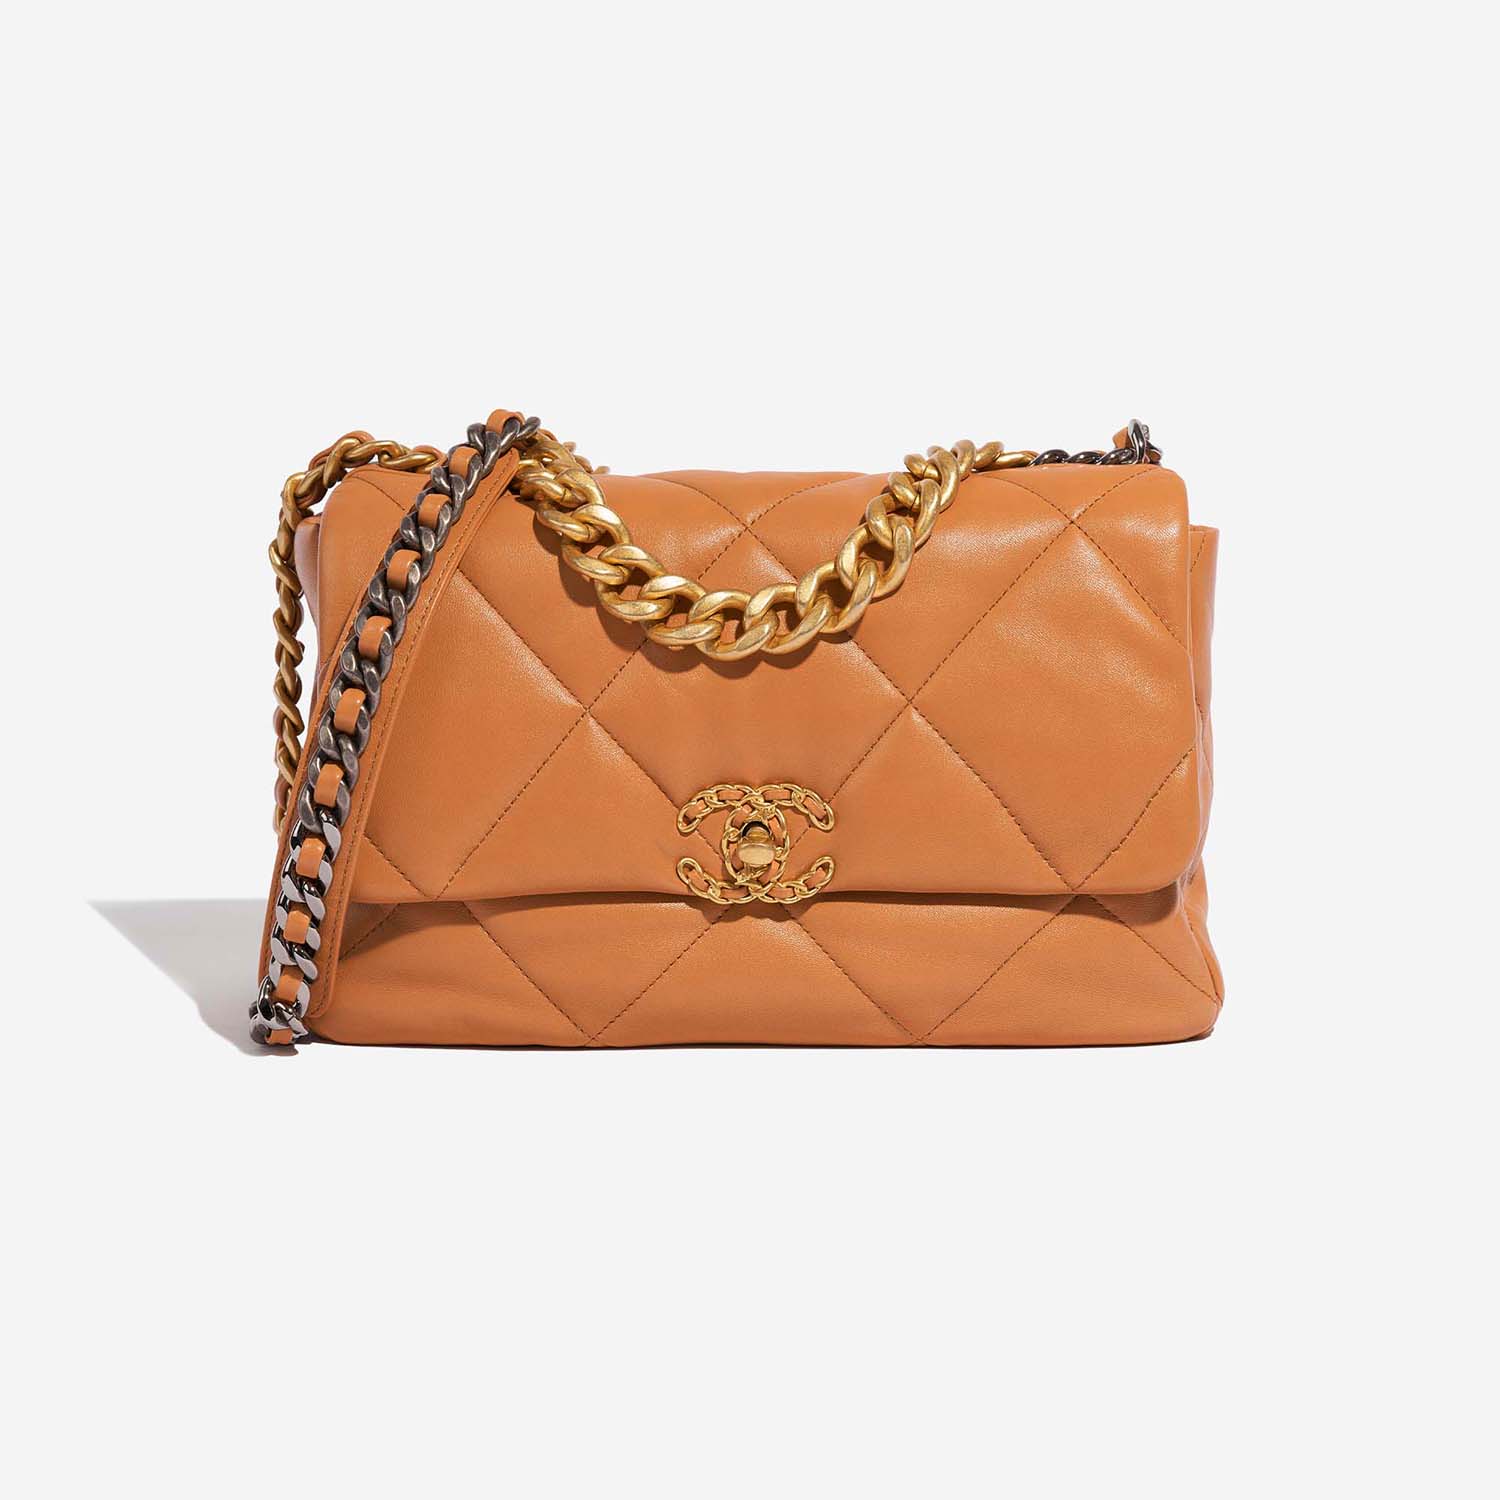 Chanel 19 Large Flap Bag Cognac Front  | Sell your designer bag on Saclab.com